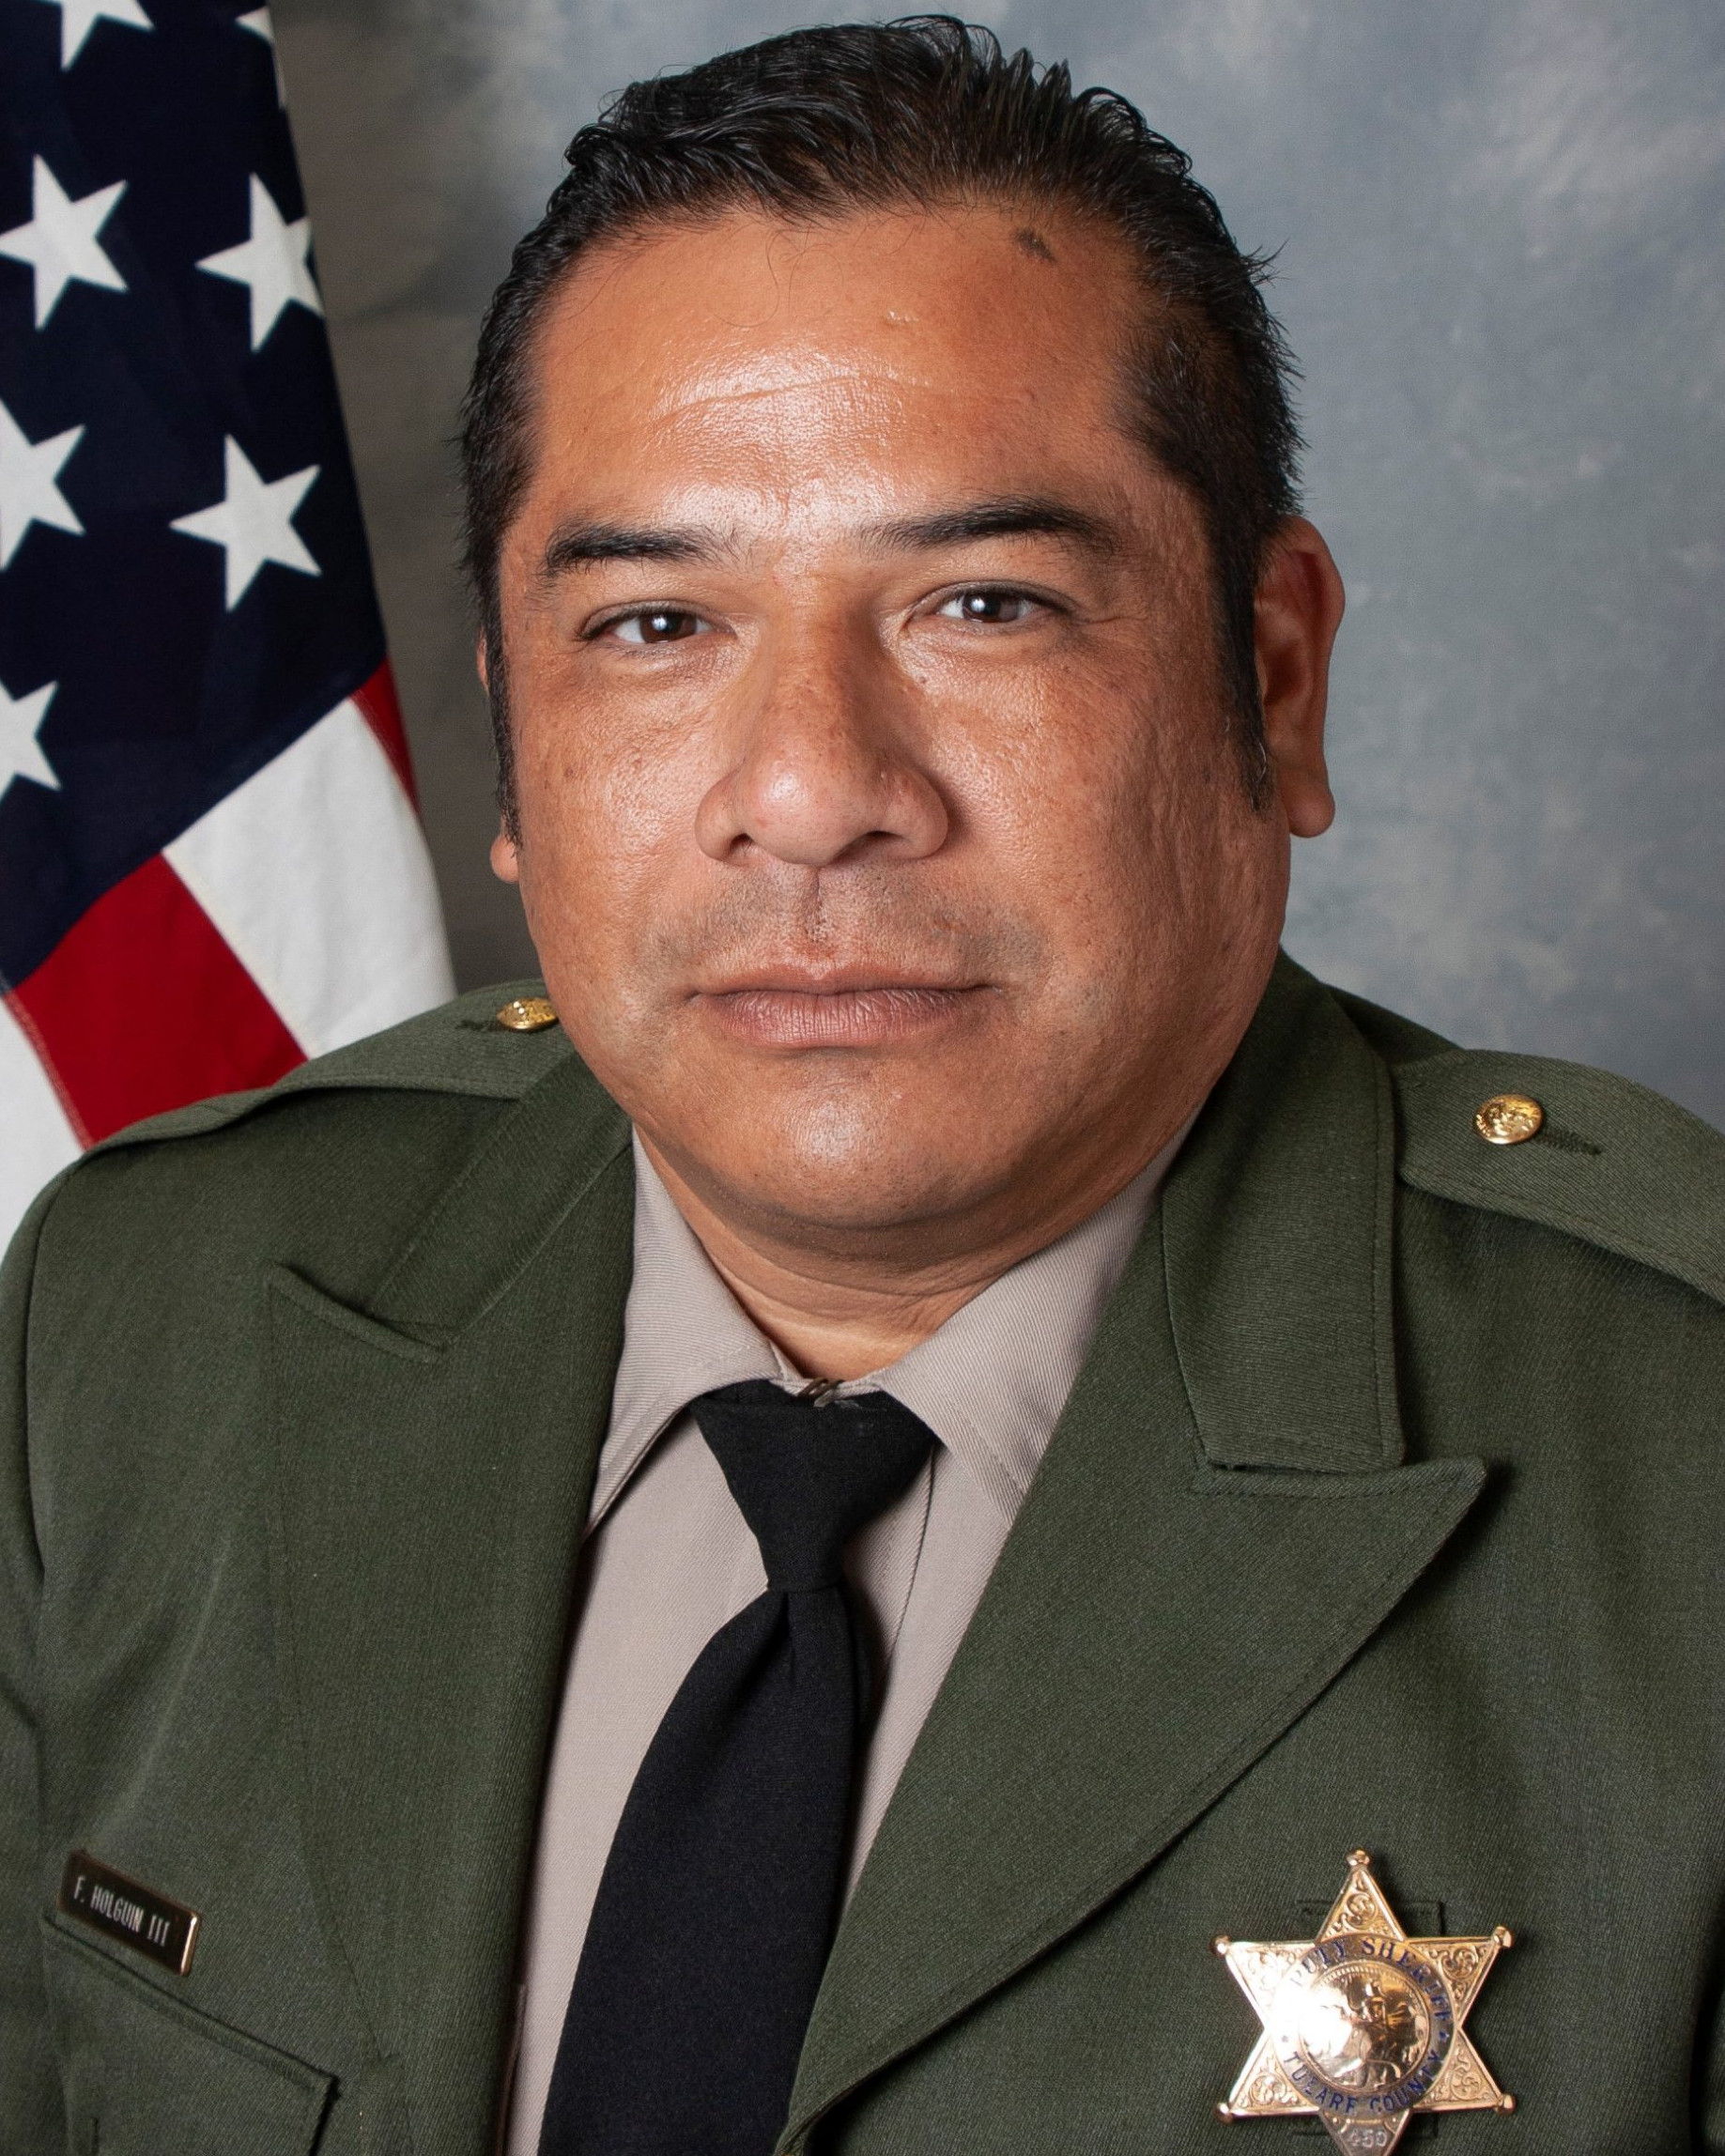 Deputy Sheriff II Frank Gonzalez Holguin, III | Tulare County Sheriff's Office, California